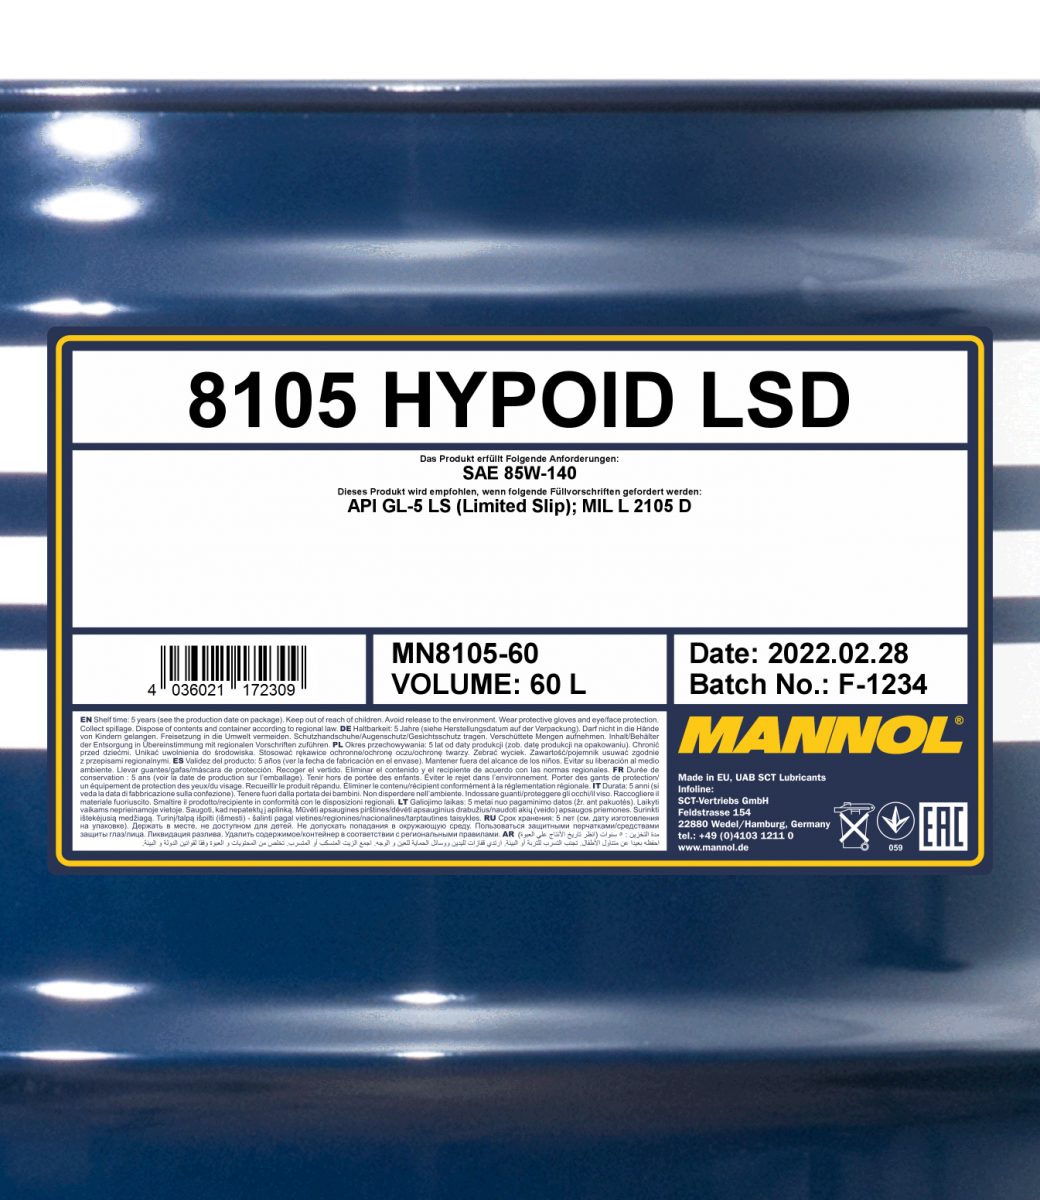 85W-140 Mannol 8105 Hypoid LSD GL-5 LS Getriebeöl 60 Liter